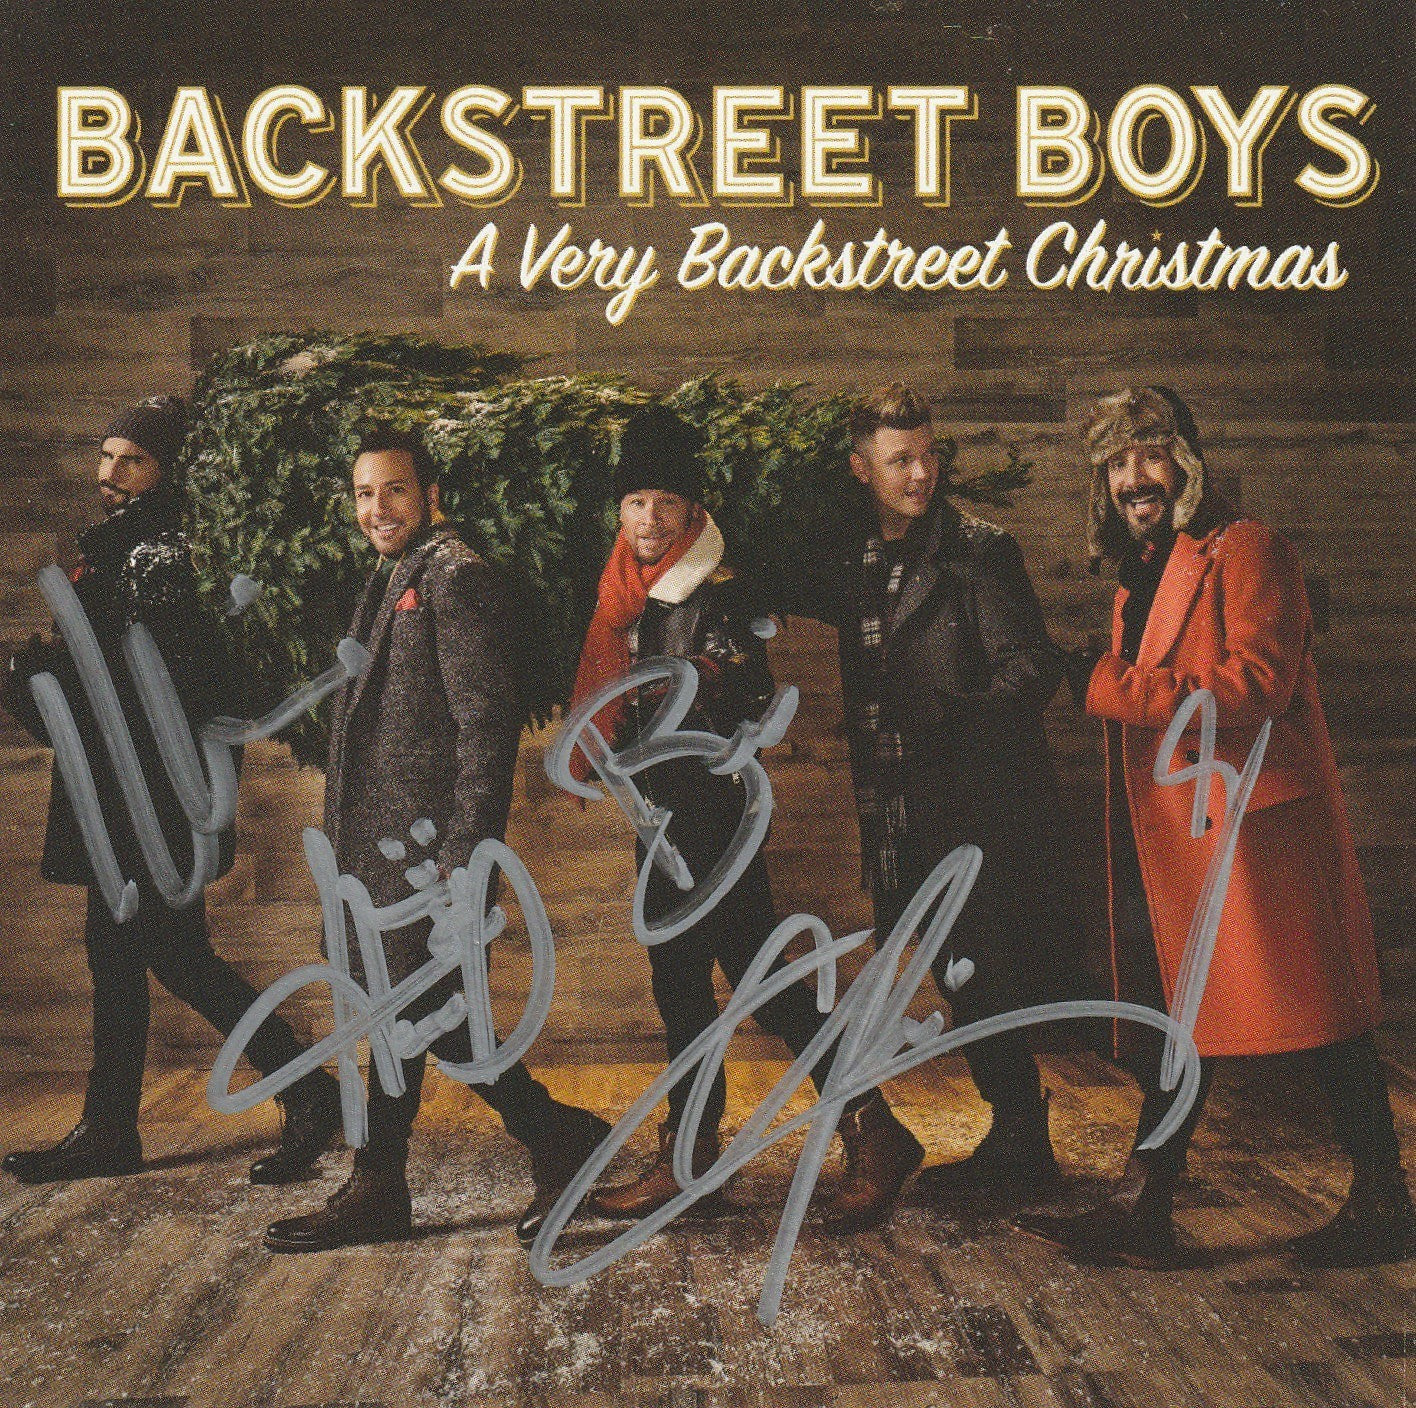 Backstreet Boys signed and framed album